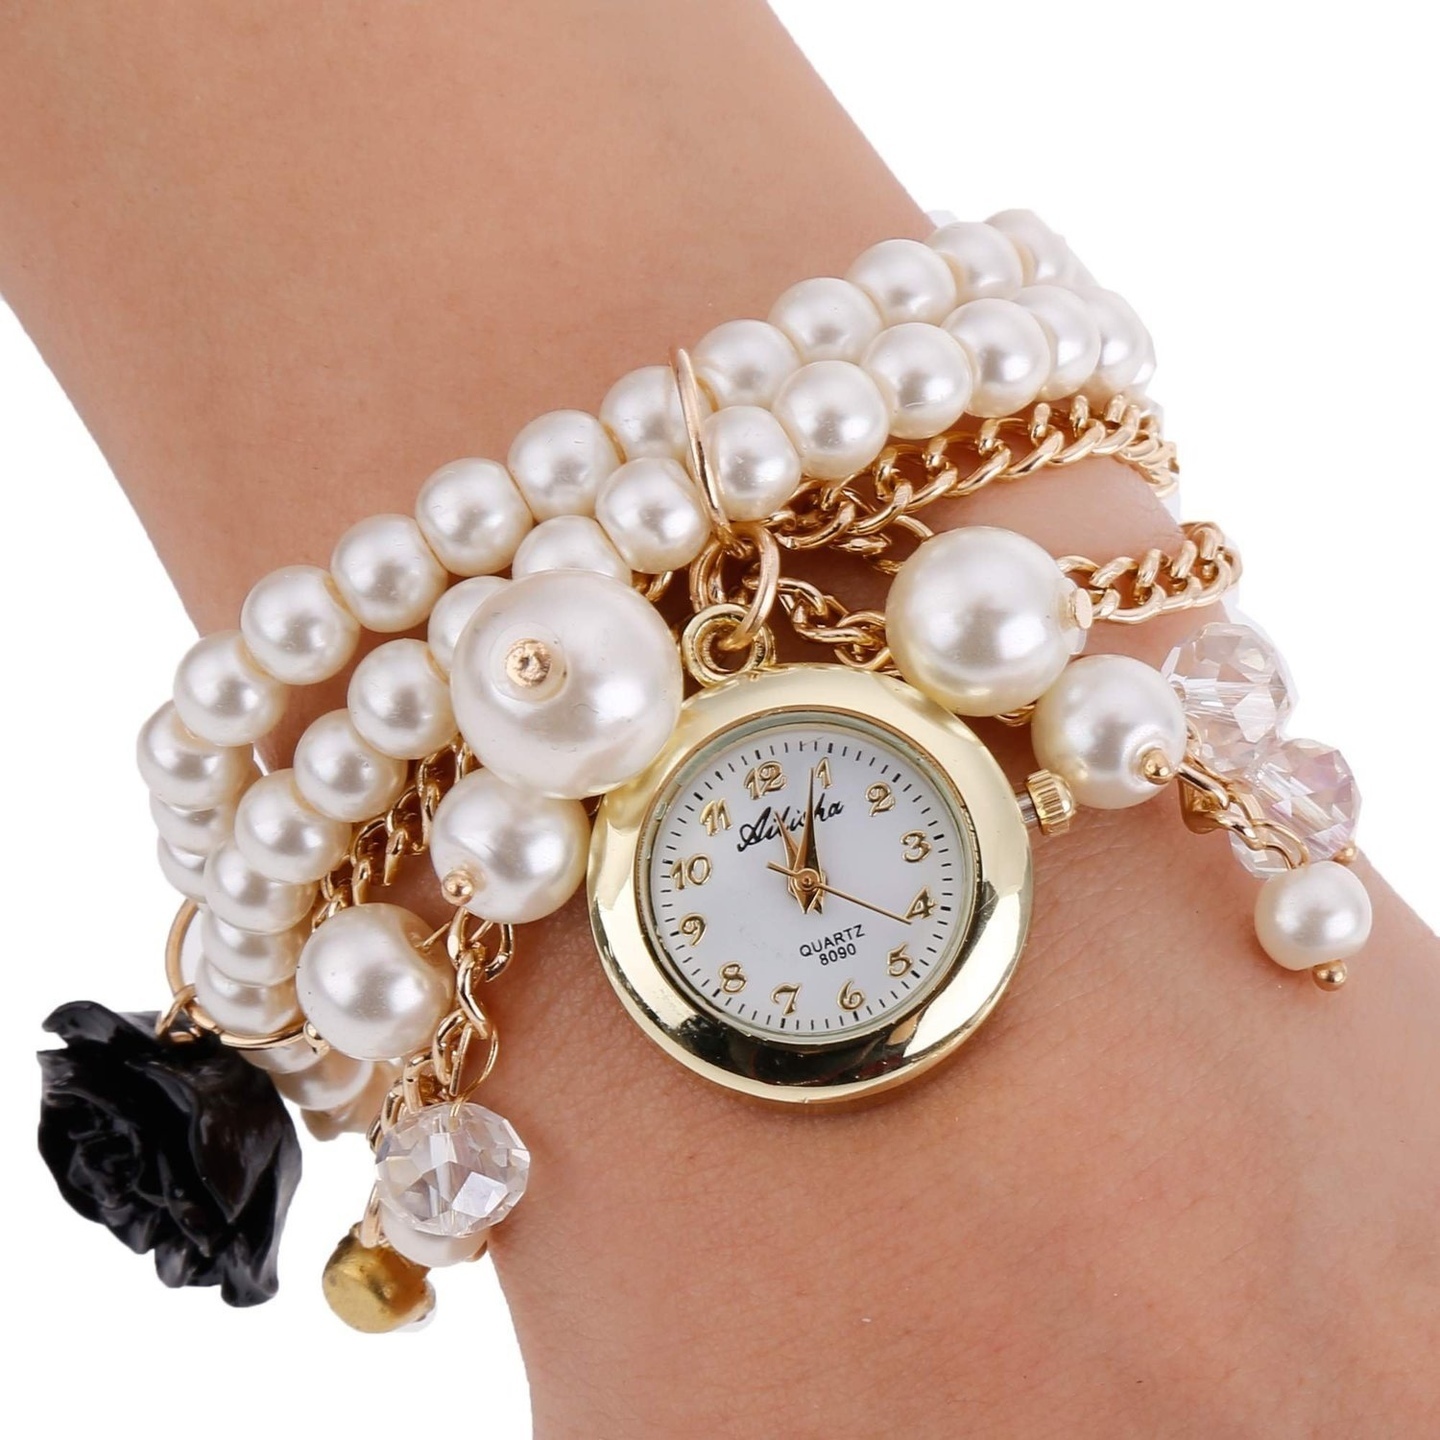 Ashiana stylish multi layer charm pearl bracelet style watch with Black rose